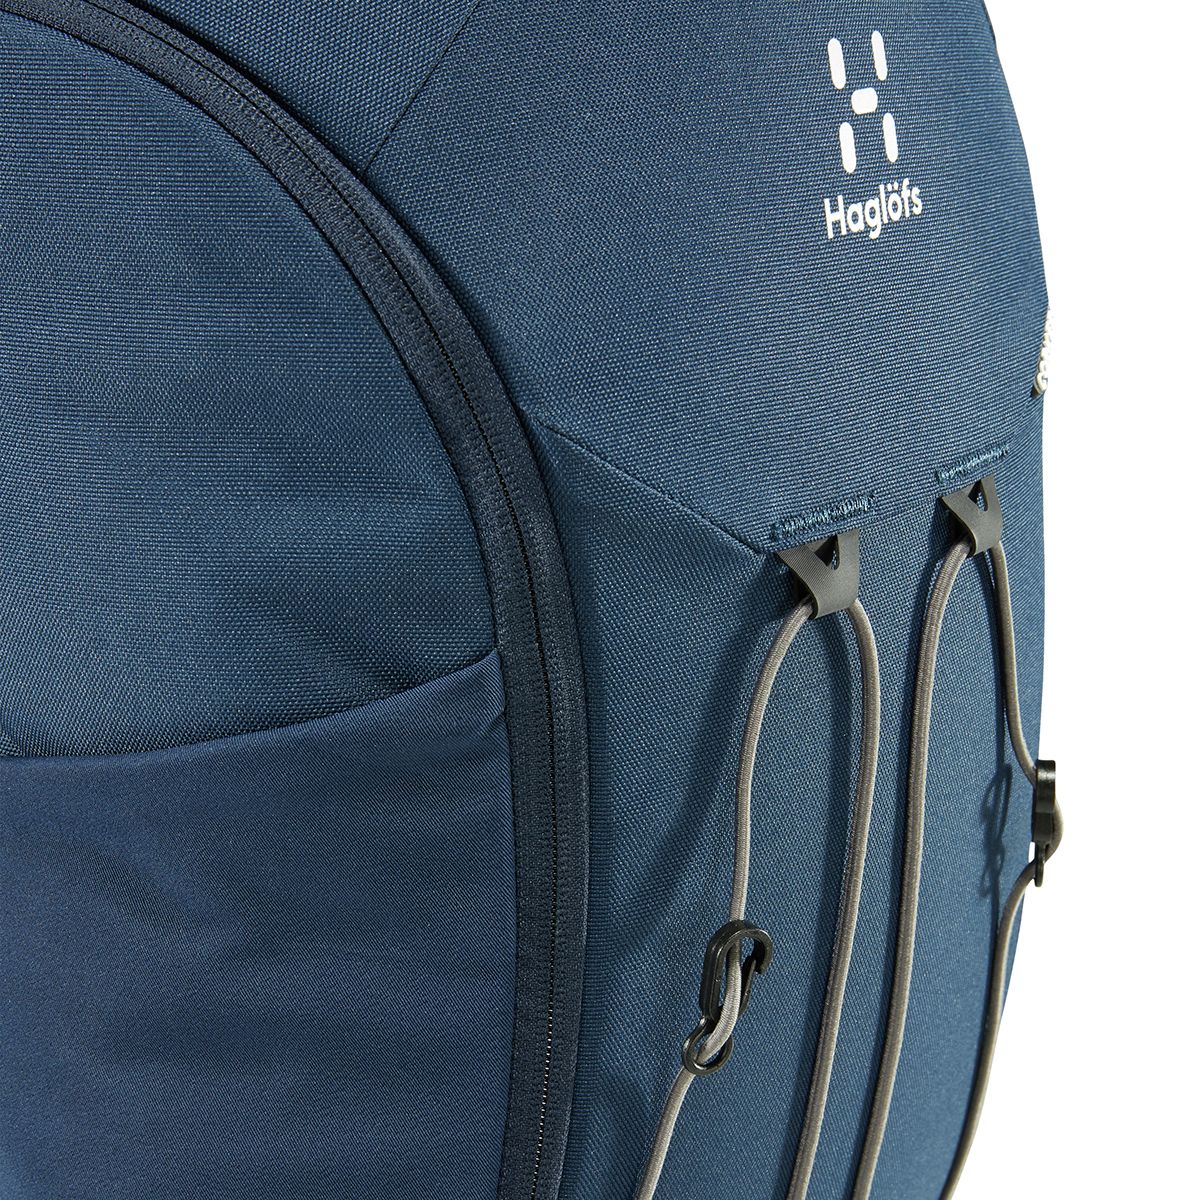 Haglofs Corker Large 20L Backpack - Hike & Camp